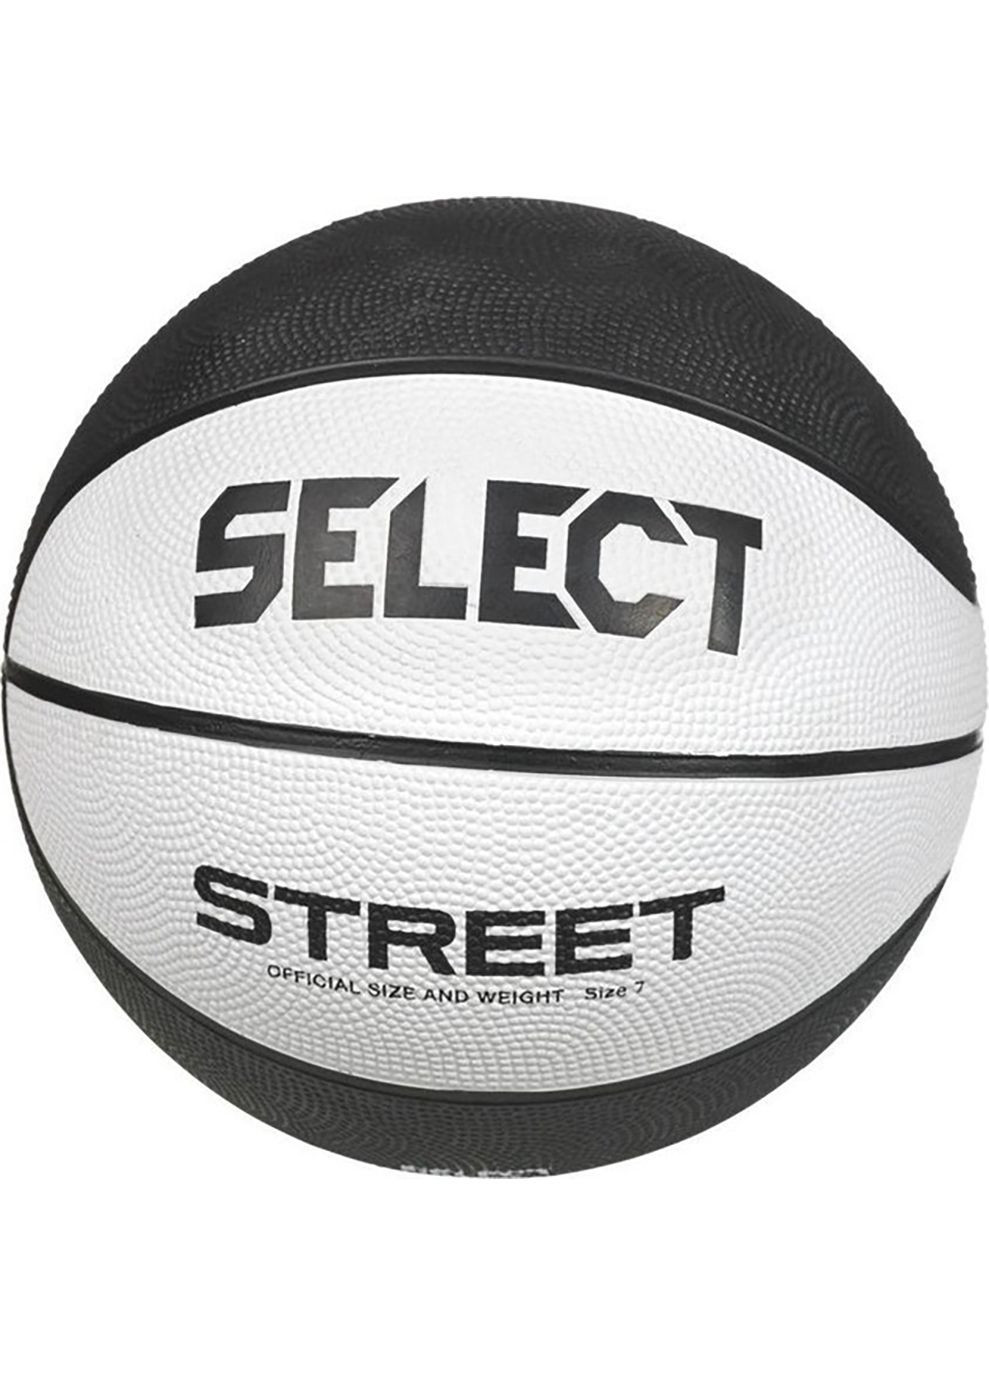 М'яч баскетбольний BASKETBALL STREET v23 біло-чорний Уні 7 Select (282615723)